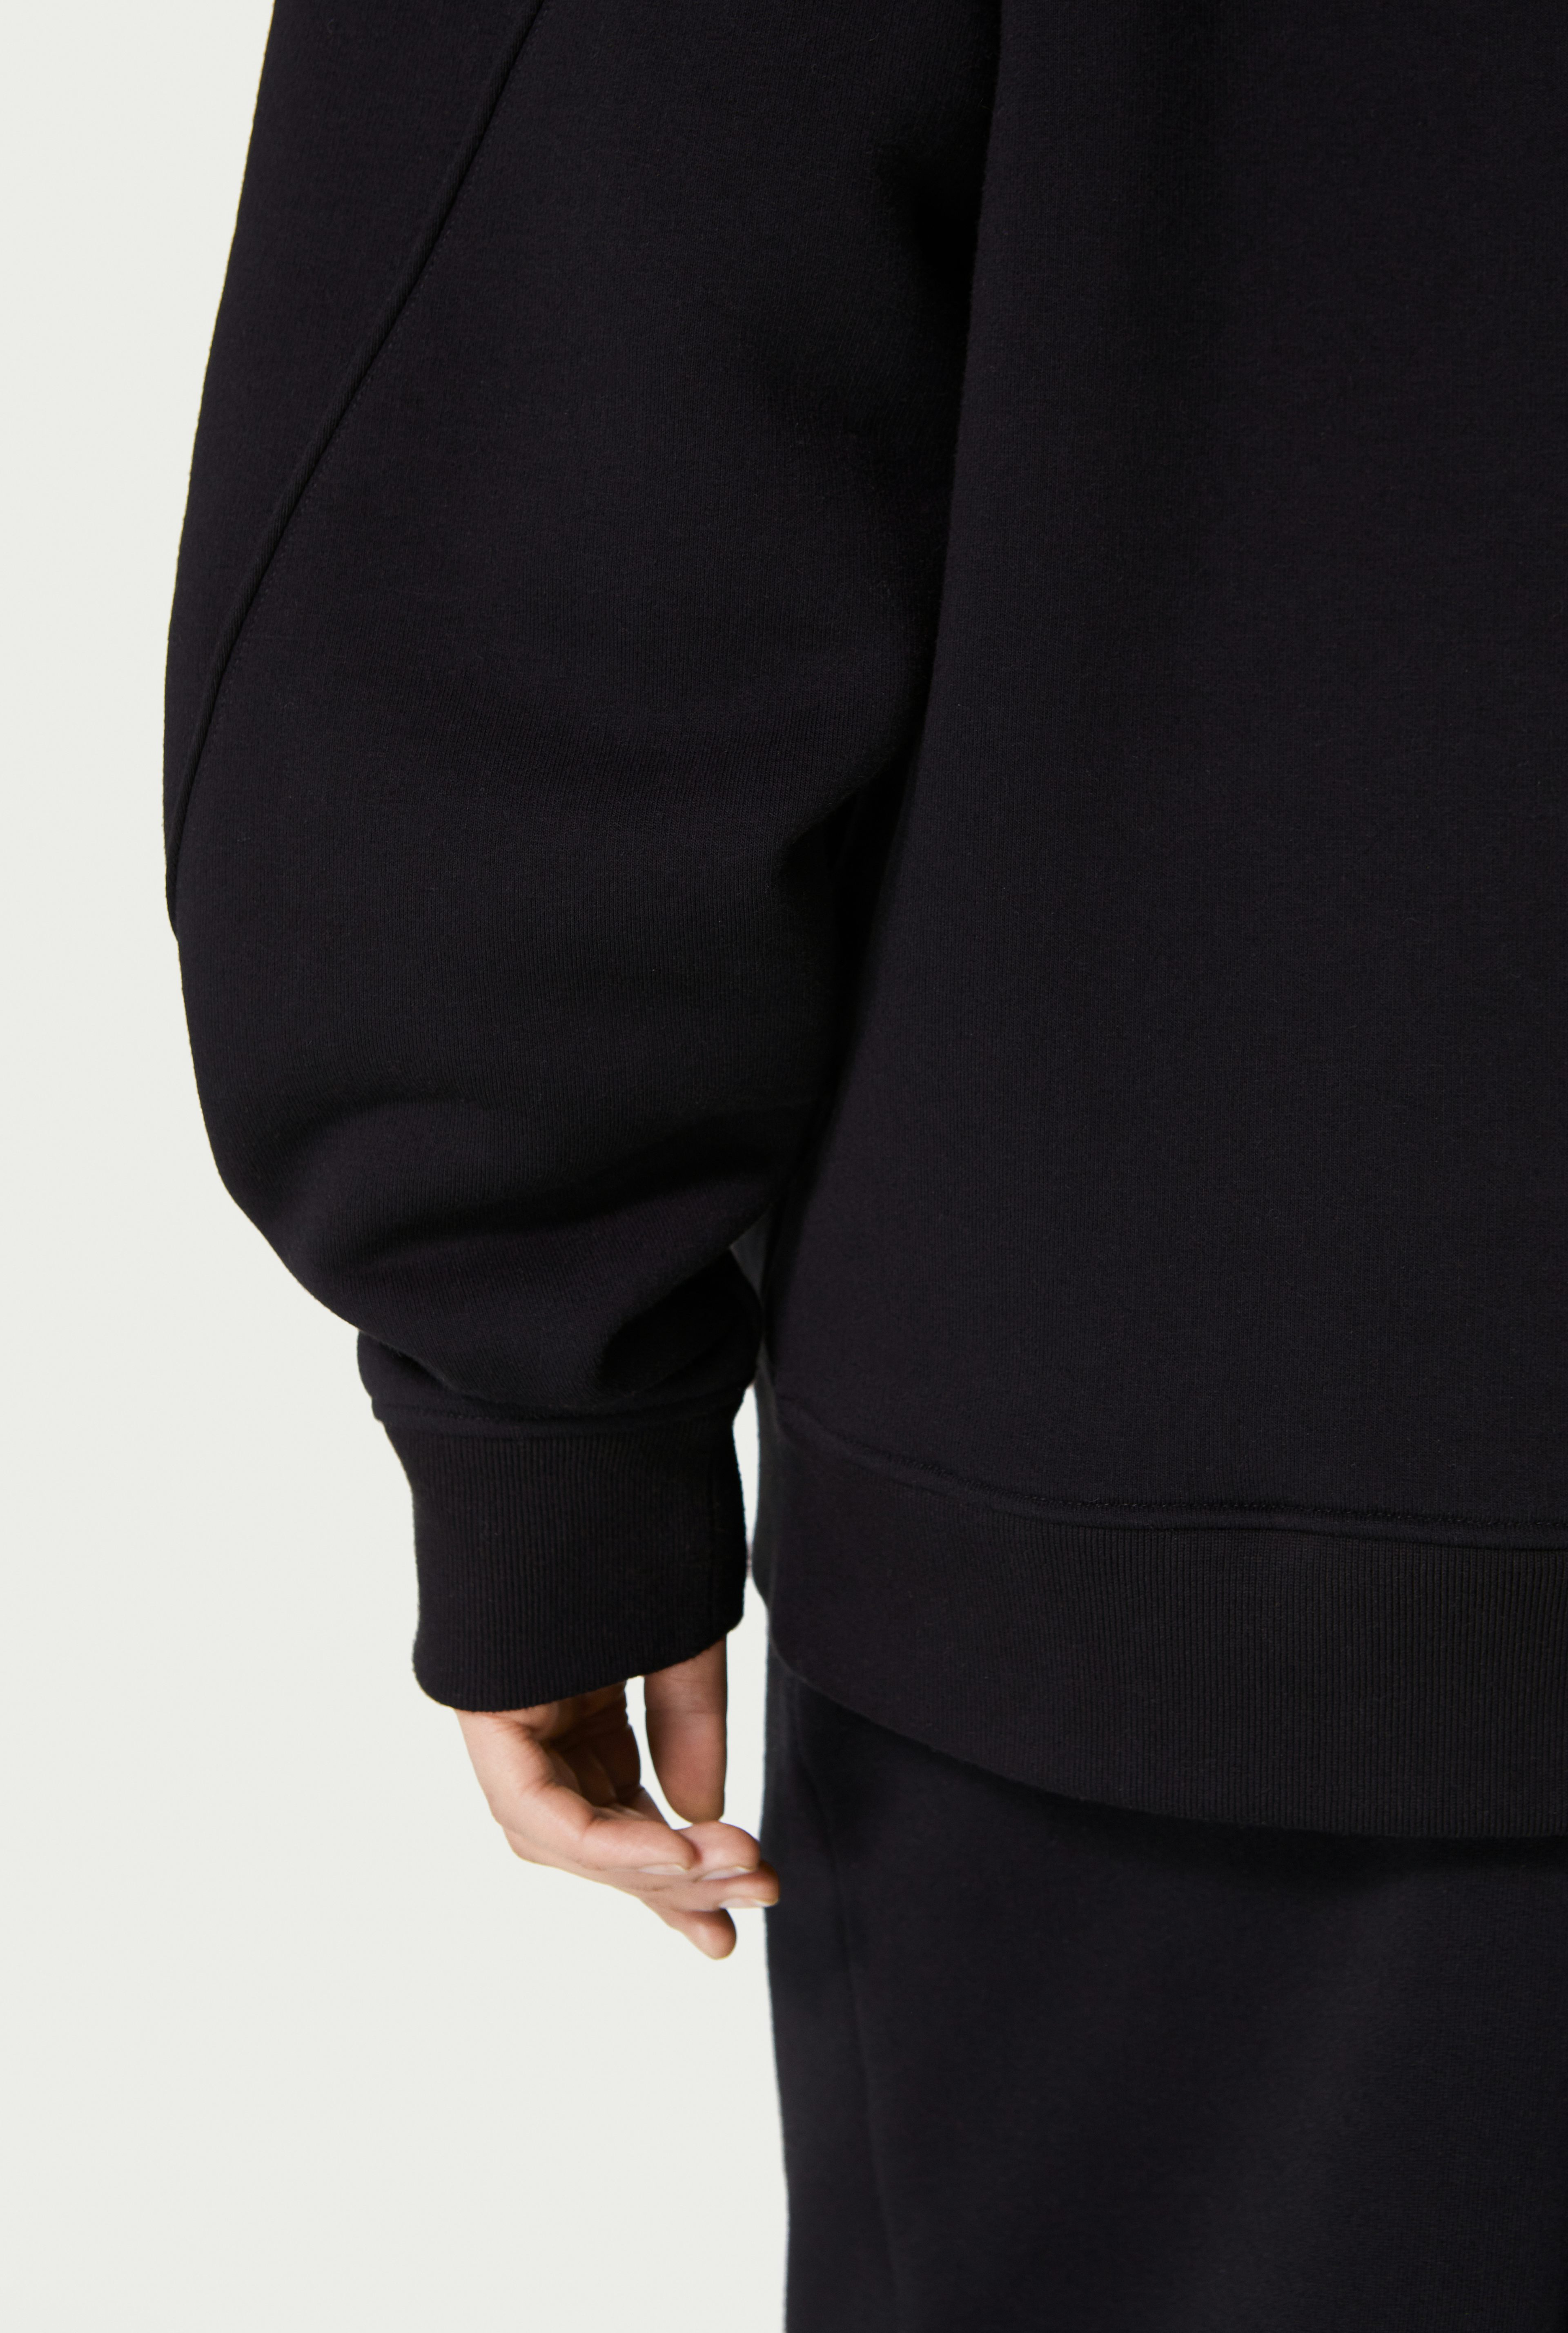 The Black Hooded Évidemment Sweatshirt Jean Paul Gaultier